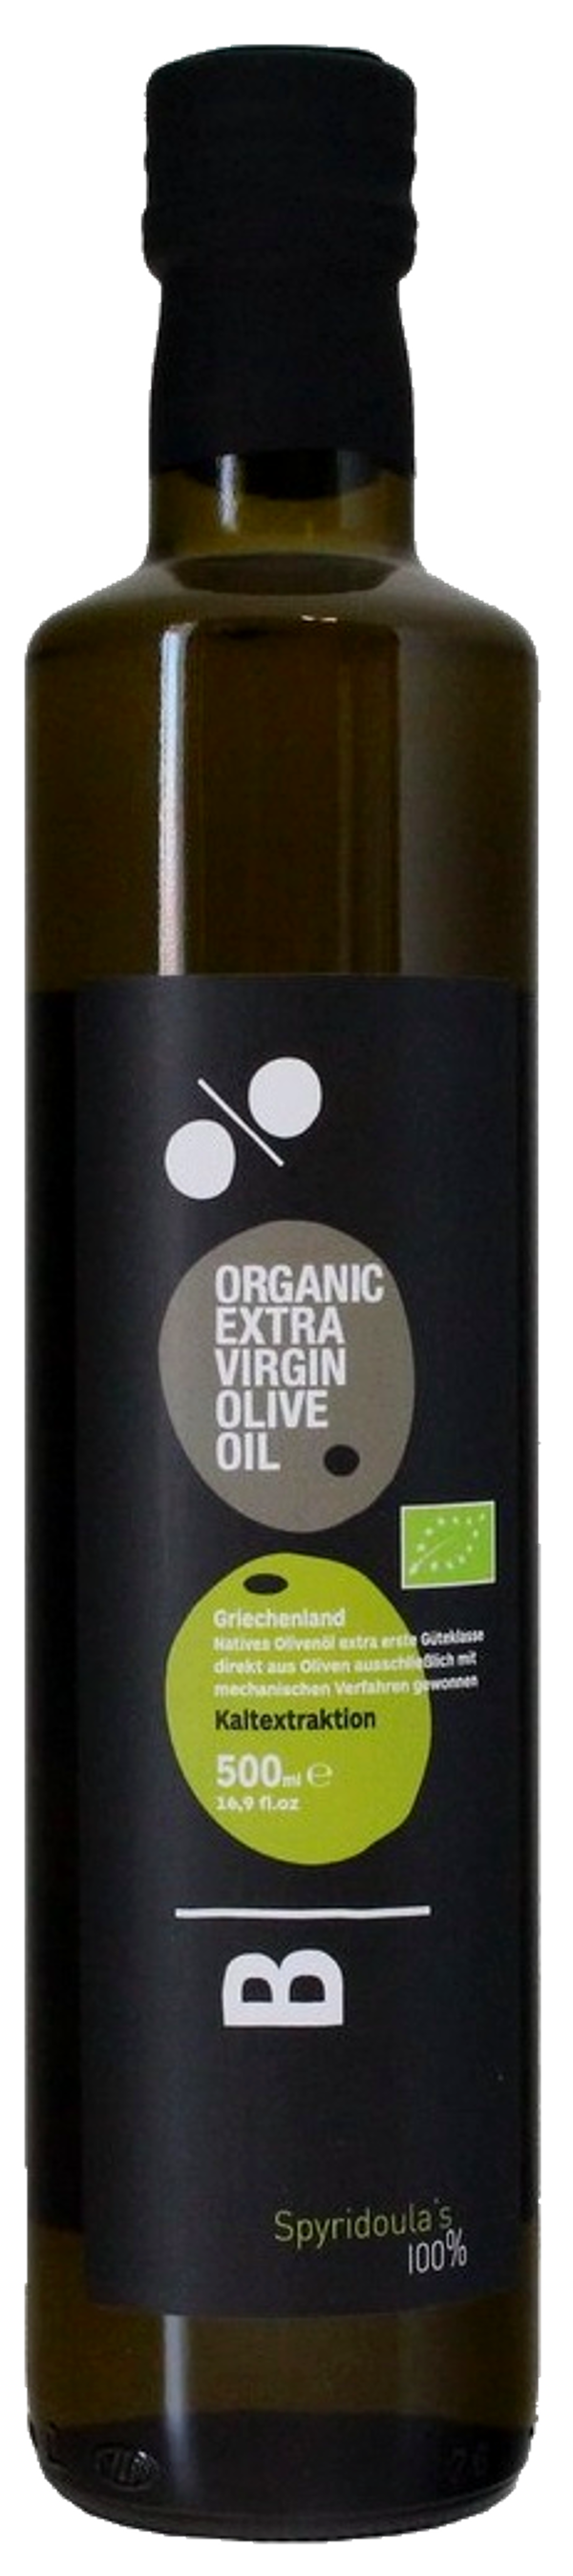 Produktfoto zu Spyridoula's Olivenöl 500ml